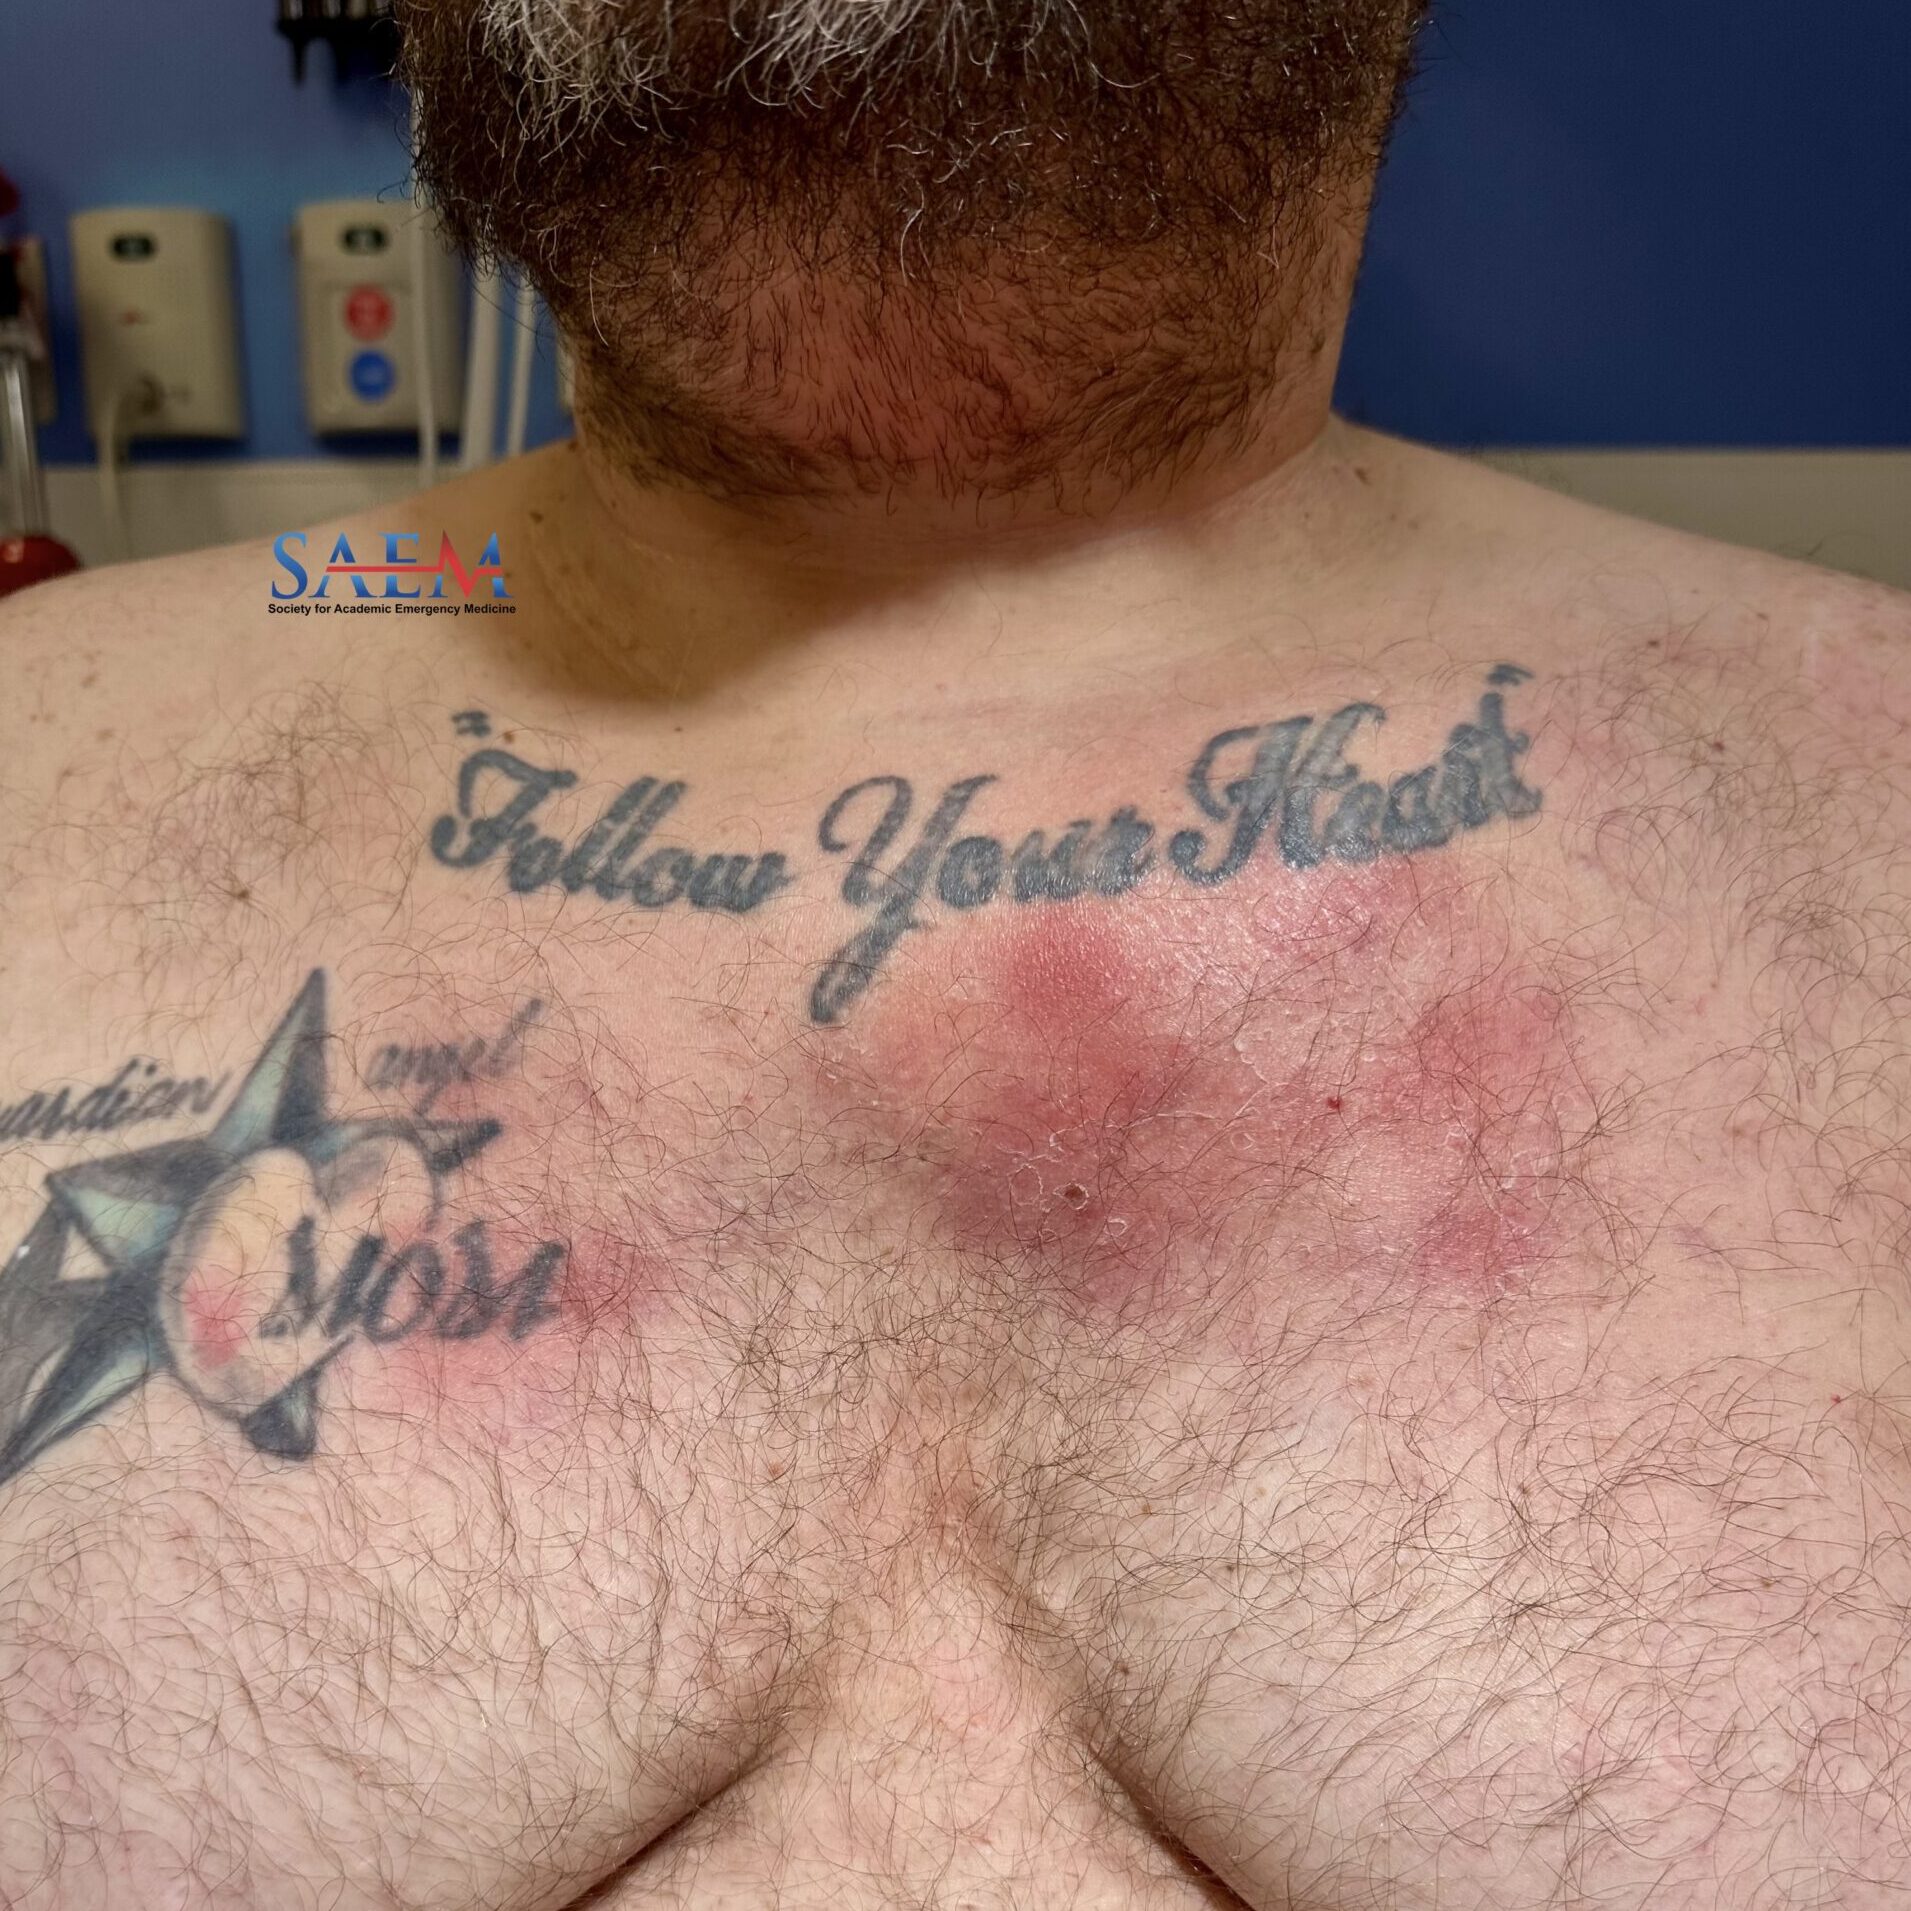 Do chest tattoos hurt? - Quora